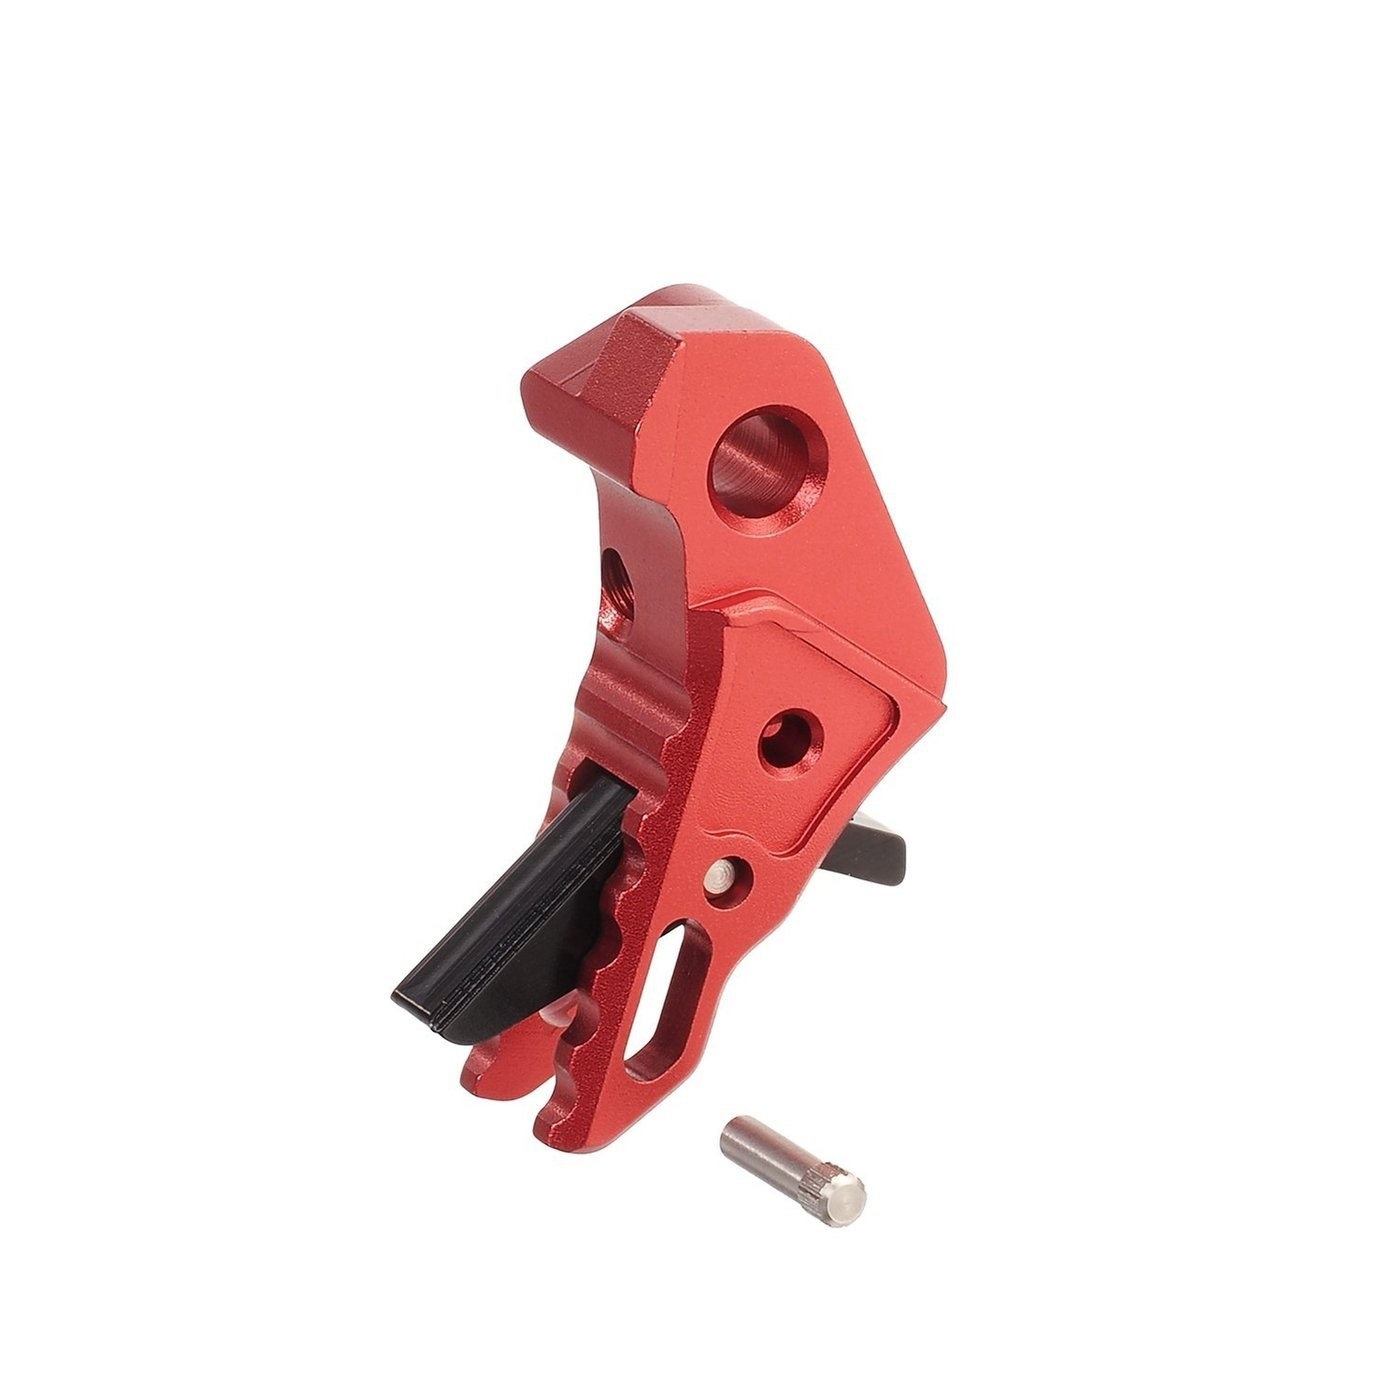 Action army Adjustable Trigger For AAP-01 - Red - Skirmshop Ireland LTD